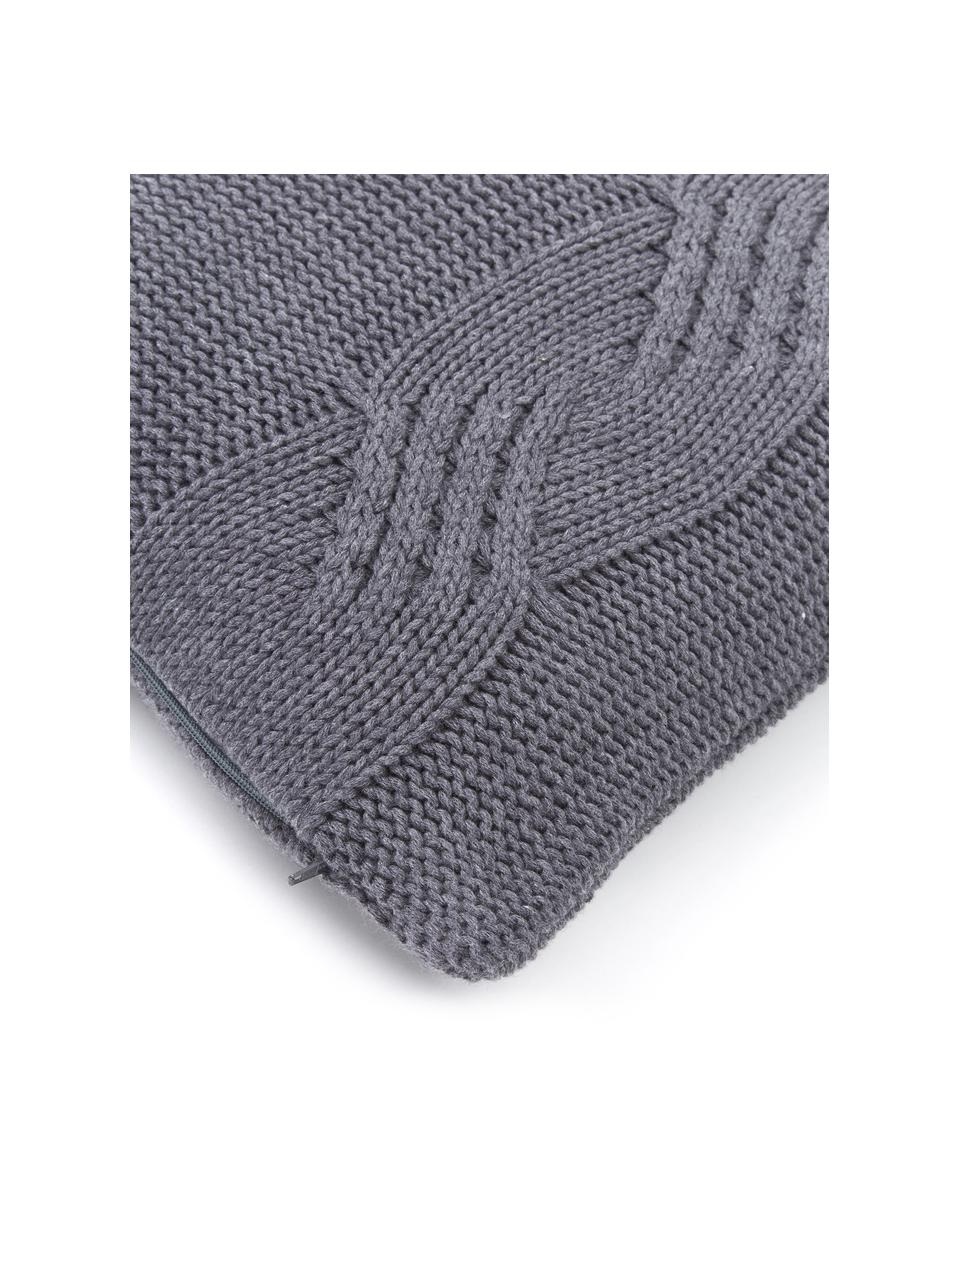 Strick-Kissenhülle Jonah mit leichtem Zopfmuster, 100% Baumwolle, Dunkelgrau, 40 x 40 cm